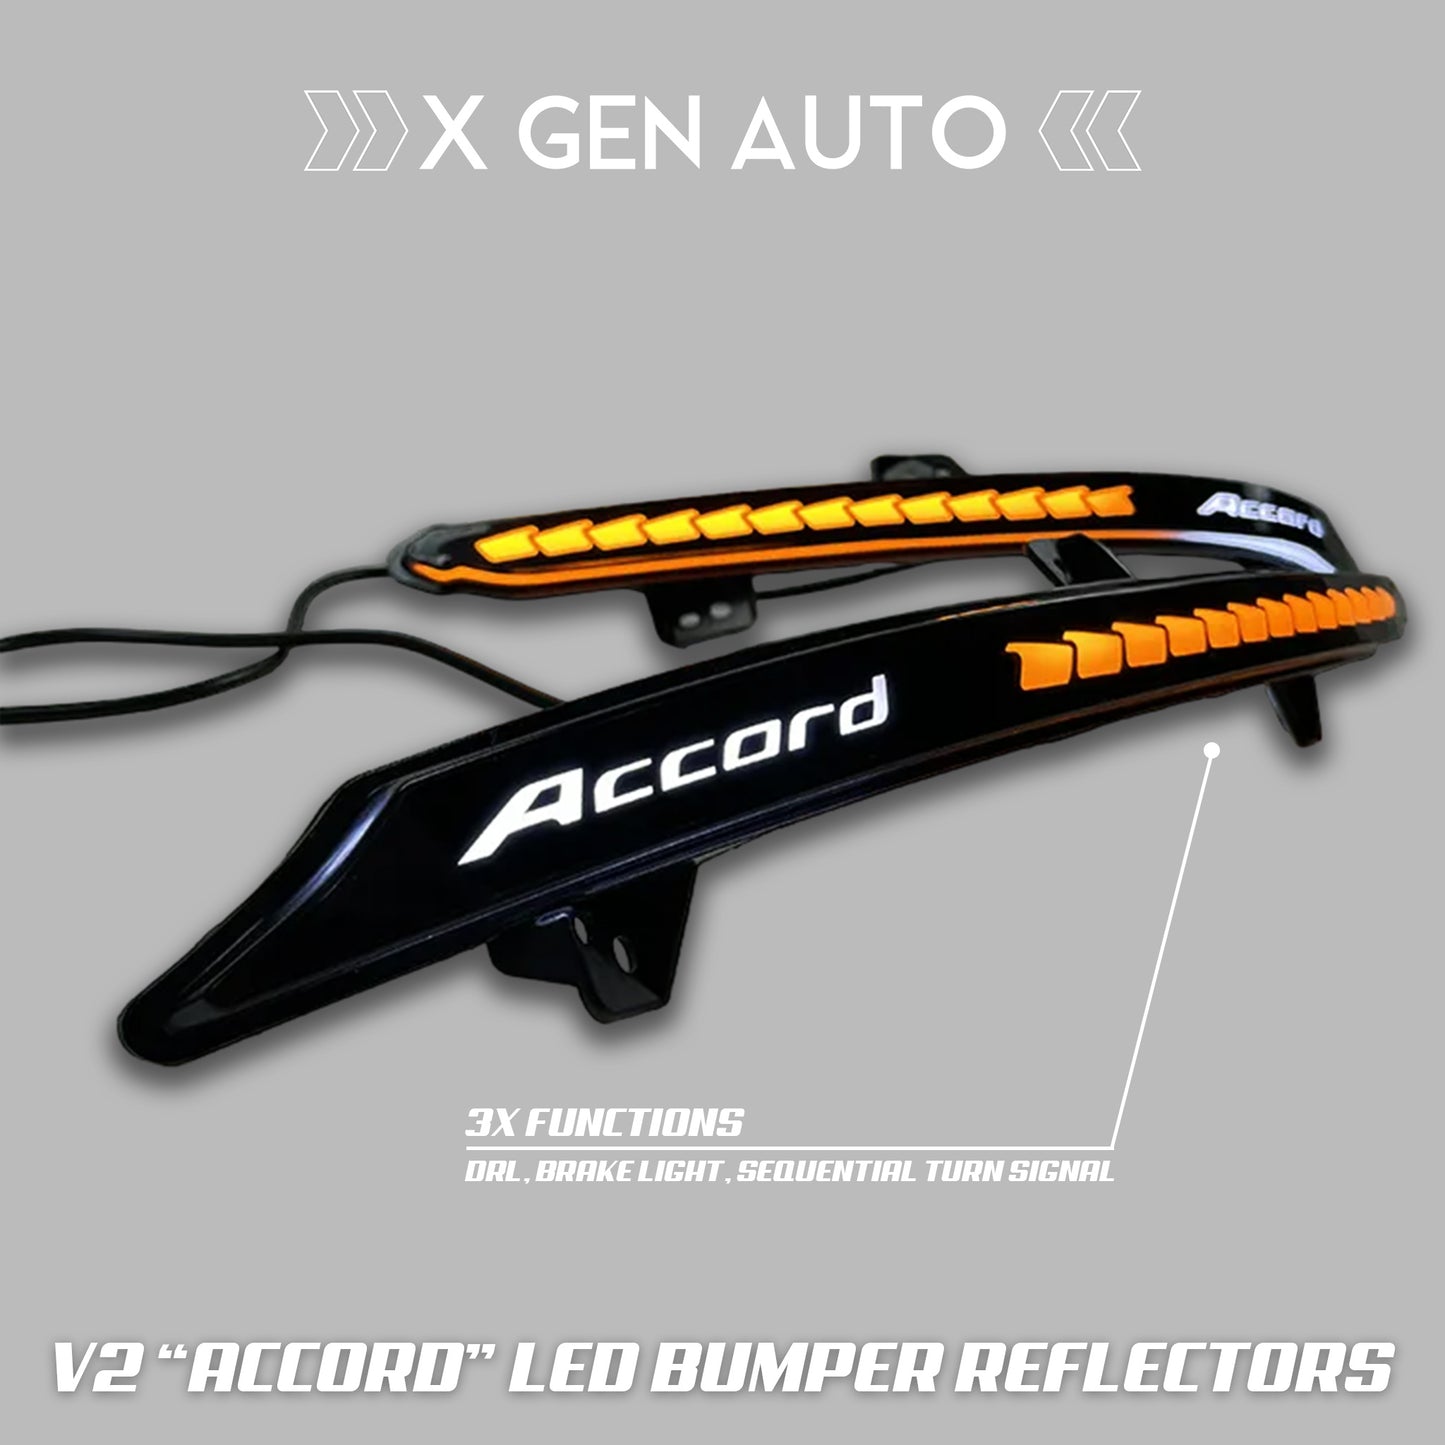 V2 "ACCORD" LED BUMPER REFLECTOR LIGHTS